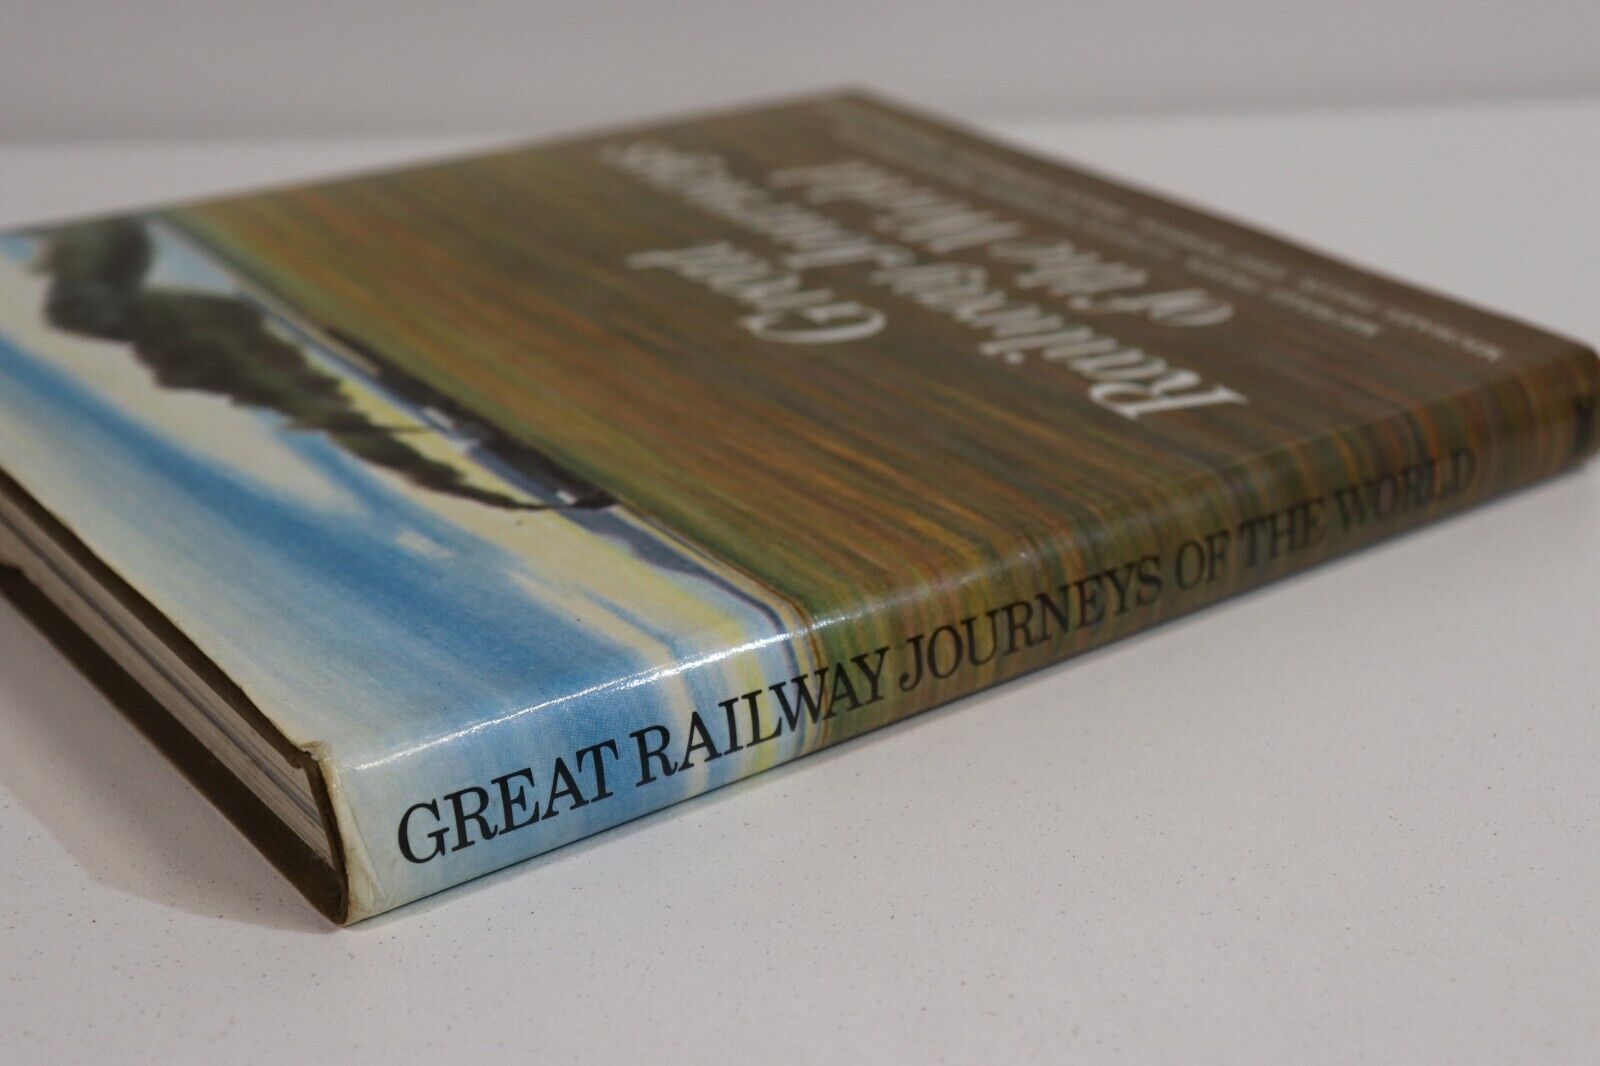 Great Railway Journeys Of The World - 1982 - Railway Travel Book